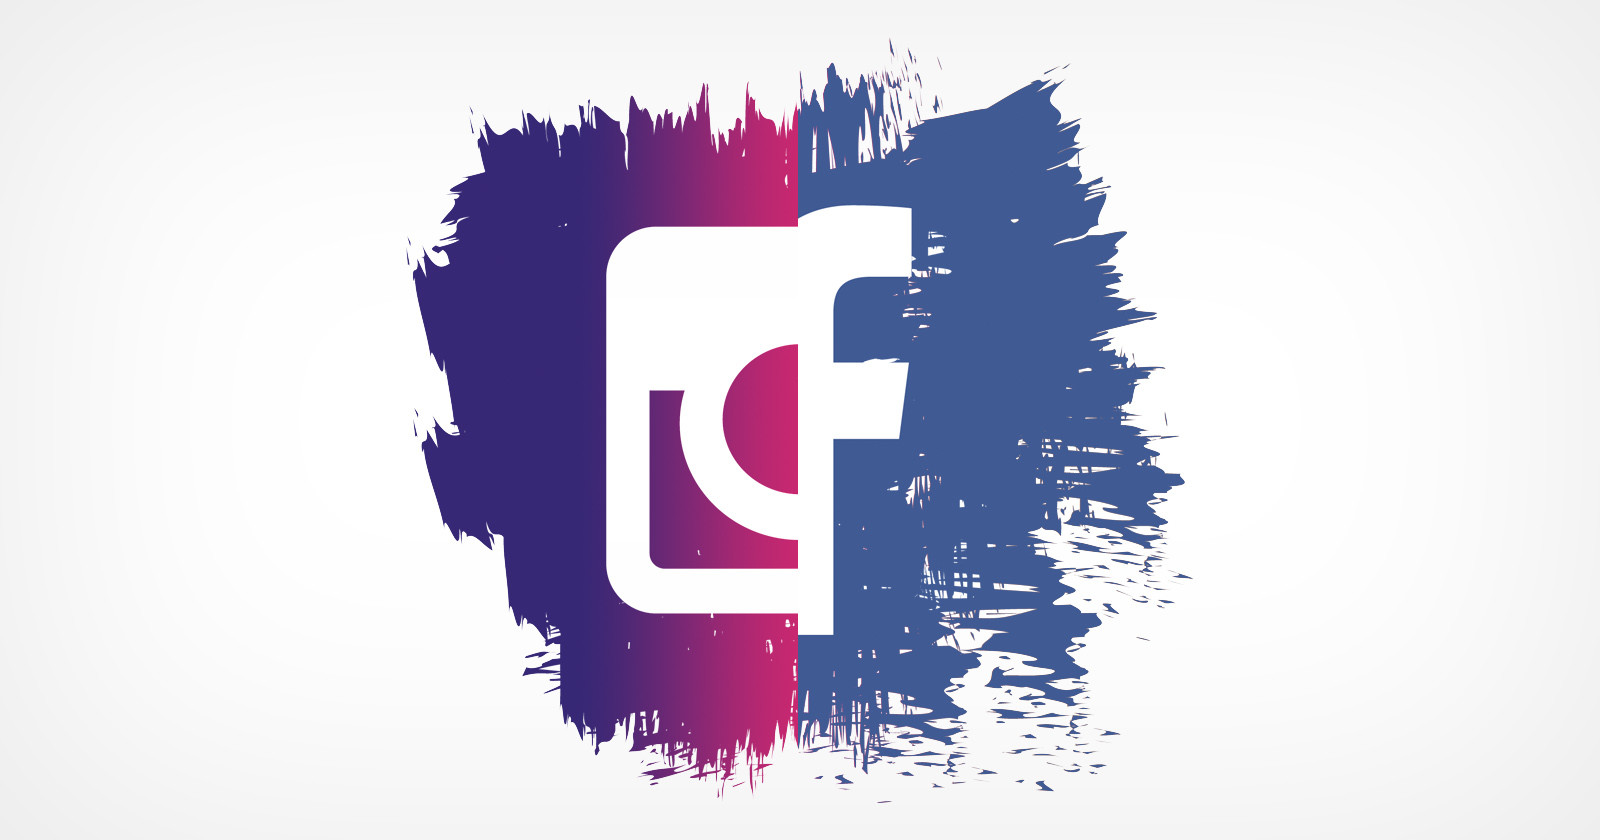  instagram surpasses two billion active users closes facebook 